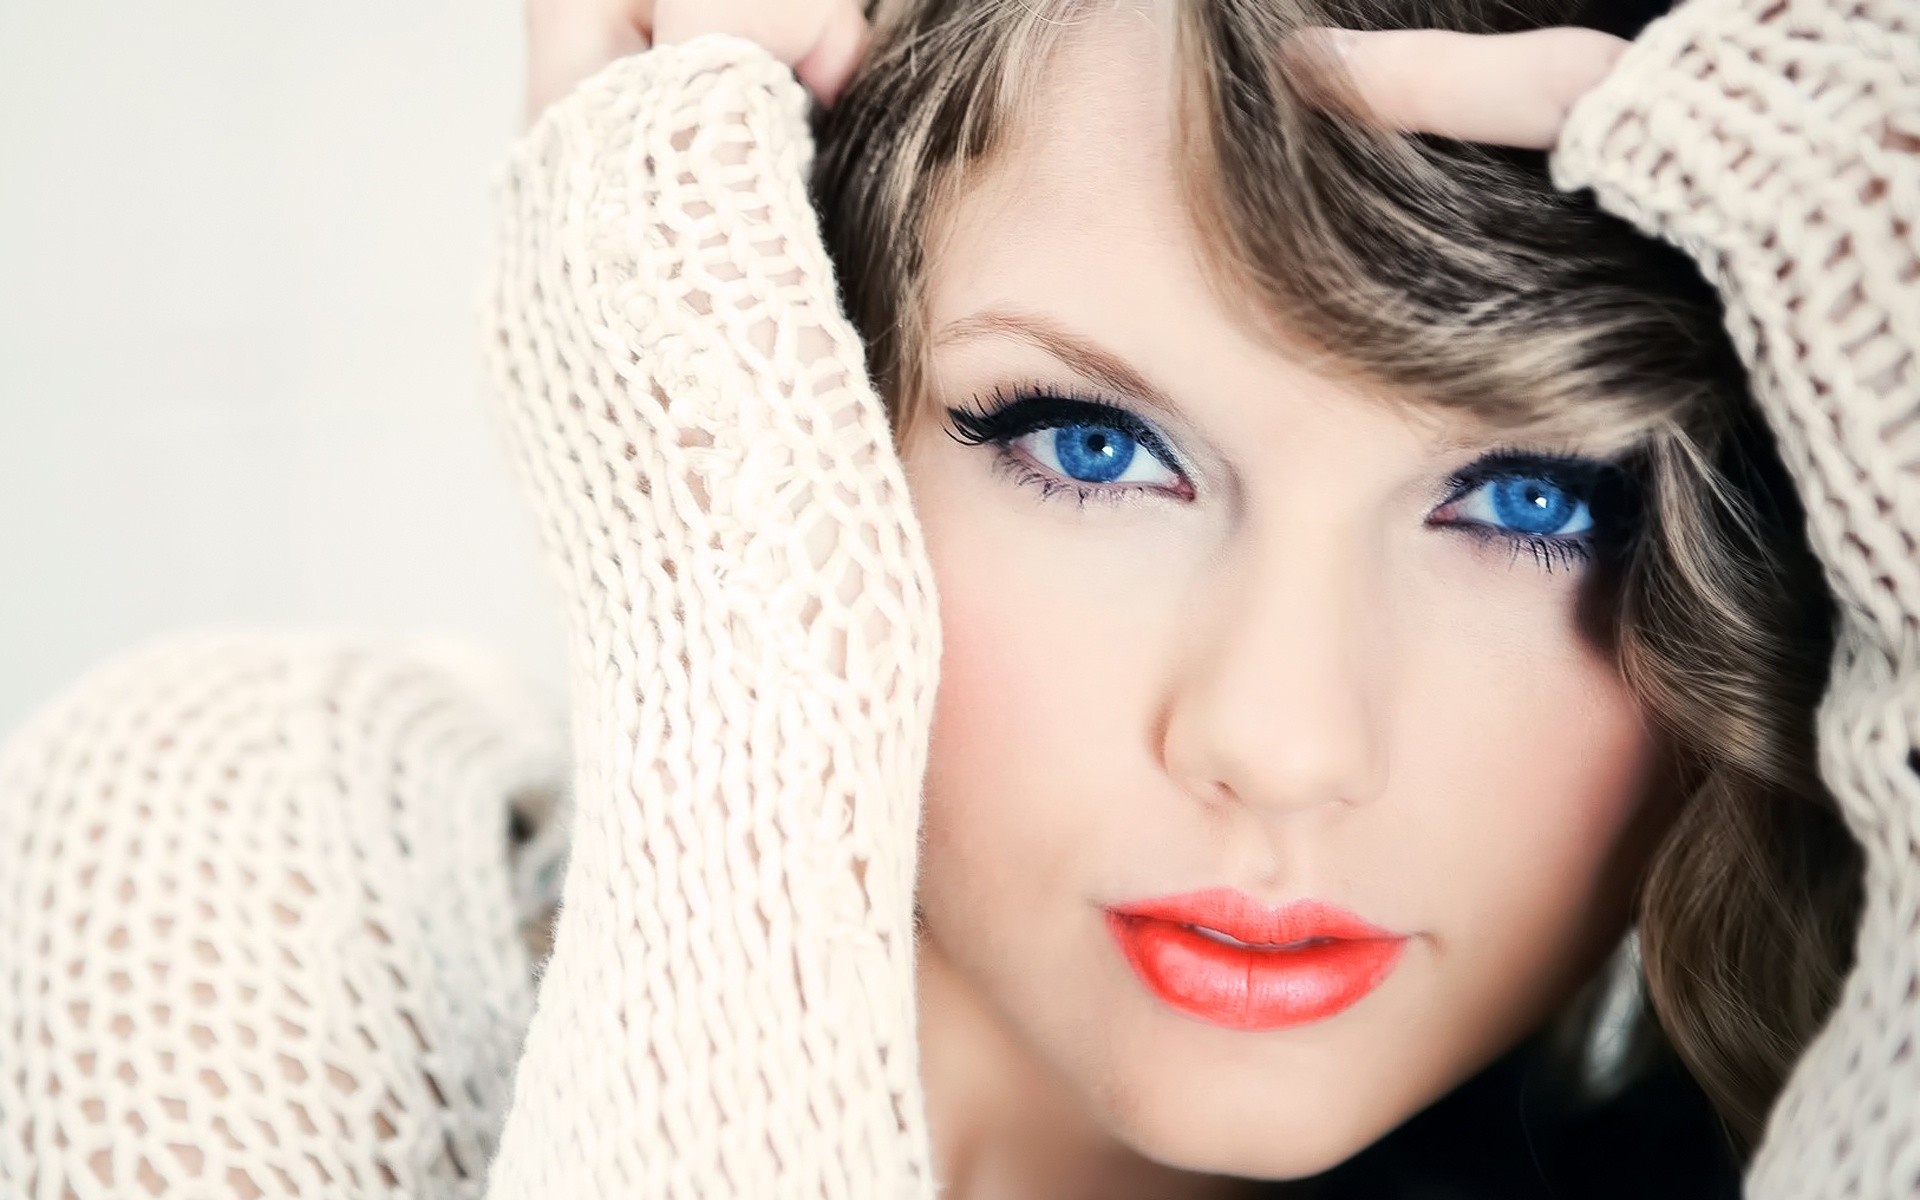 People 1920x1200 women sweater blue eyes red lipstick Taylor Swift singer face celebrity